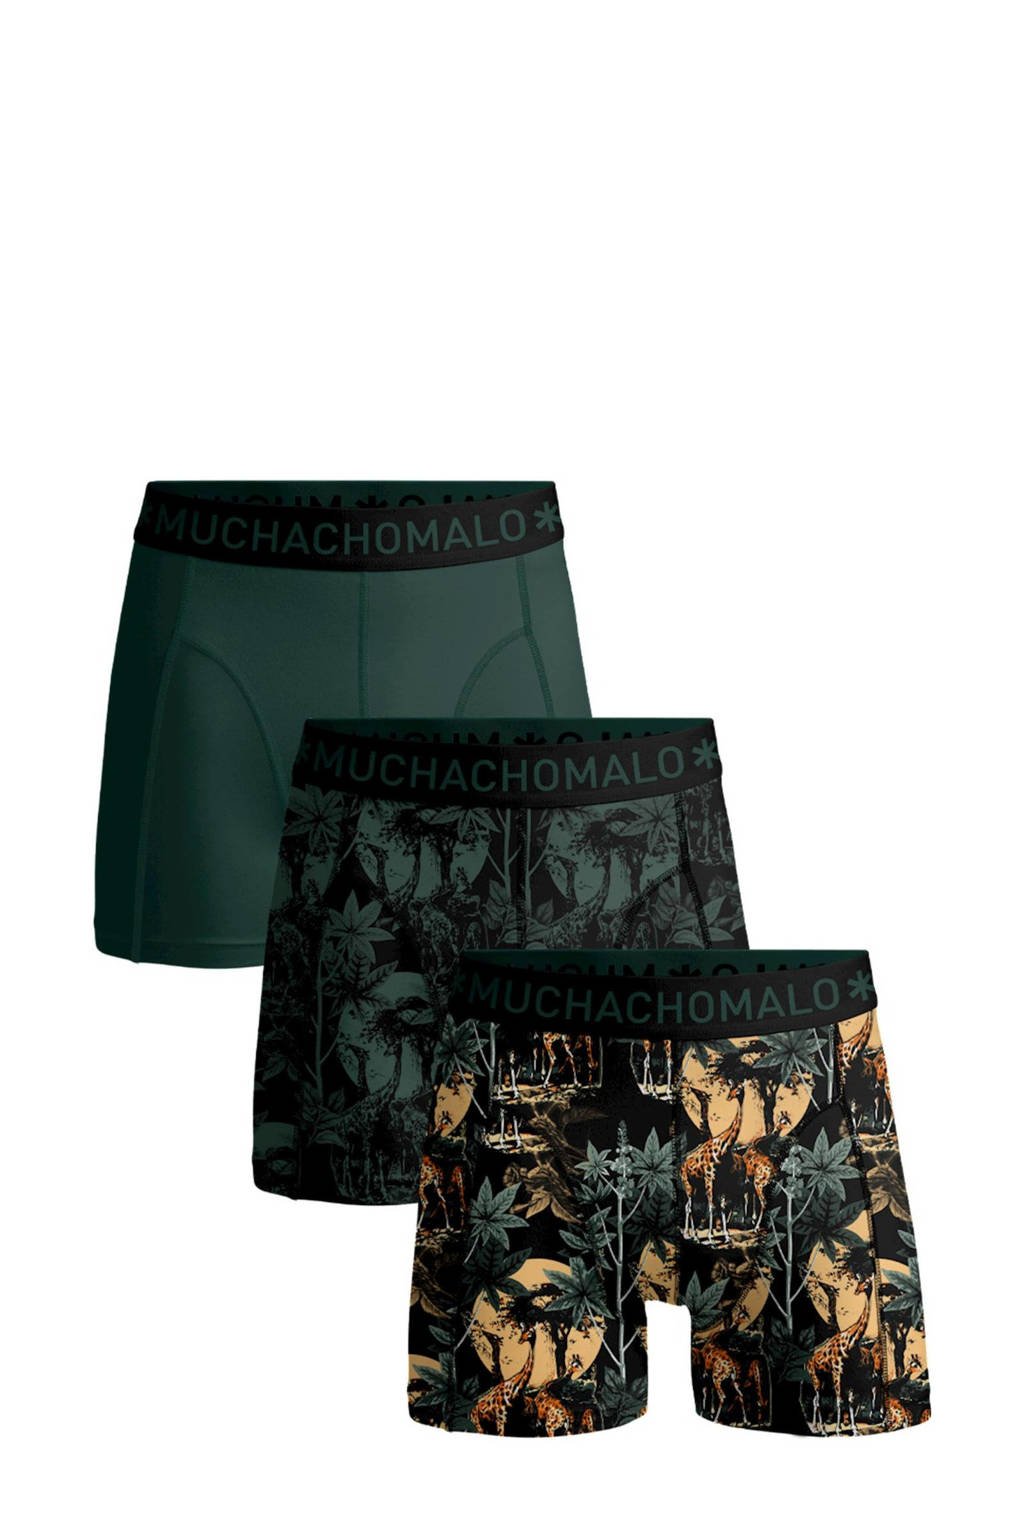 Muchachomalo   boxershort Tropical - set van 3 groen/zwart/oranje, Groen/zwart/oranje